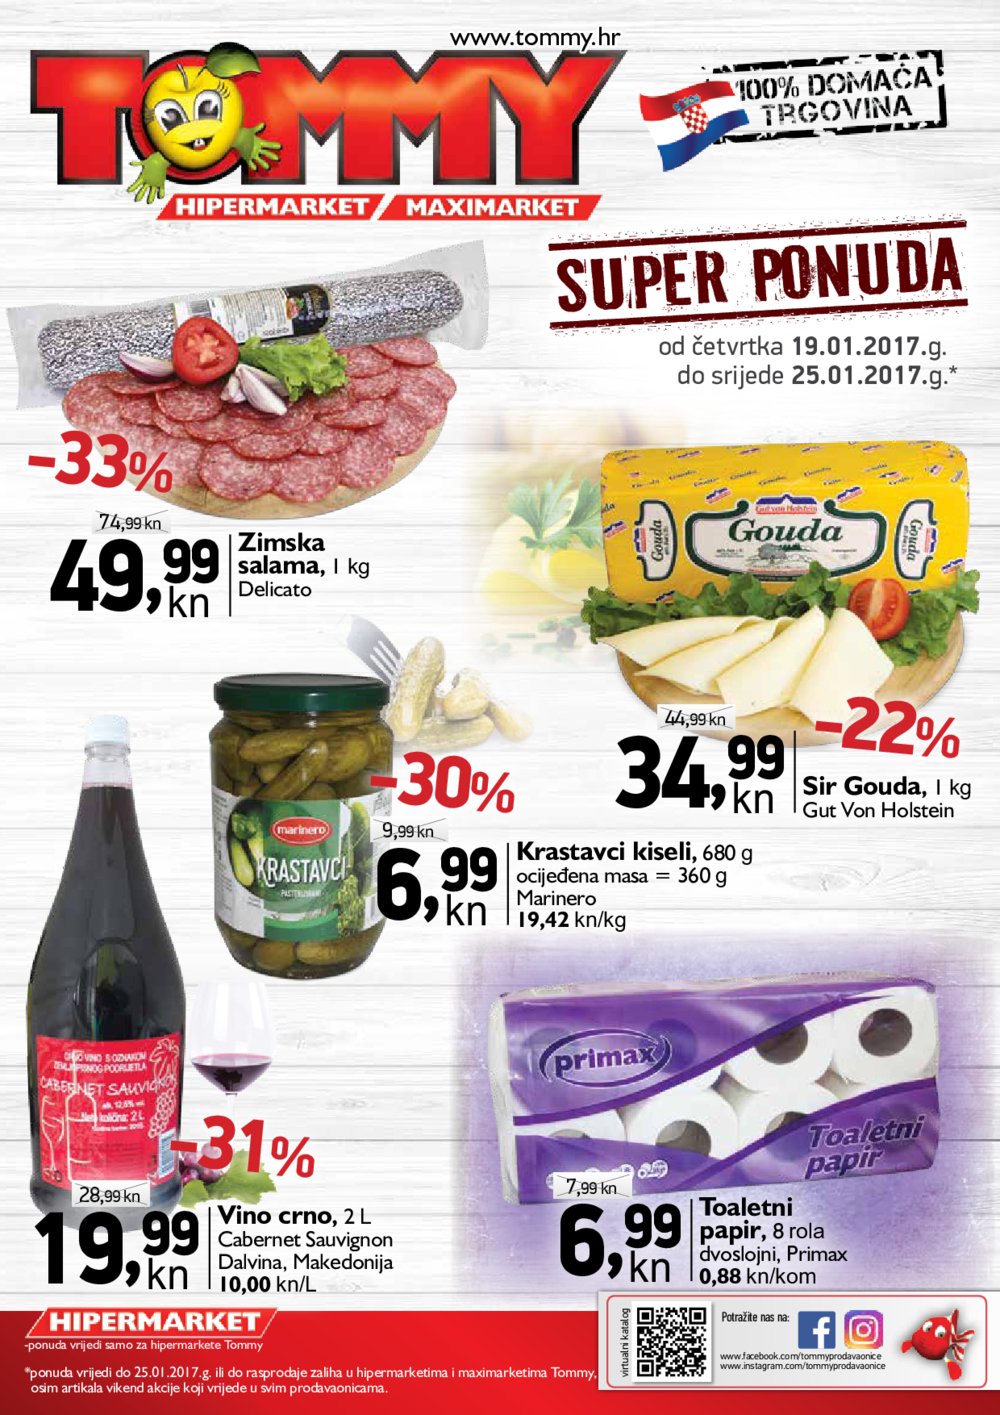 Tommy katalog Hipermarket i maximarket super ponuda do 25.01.2017.